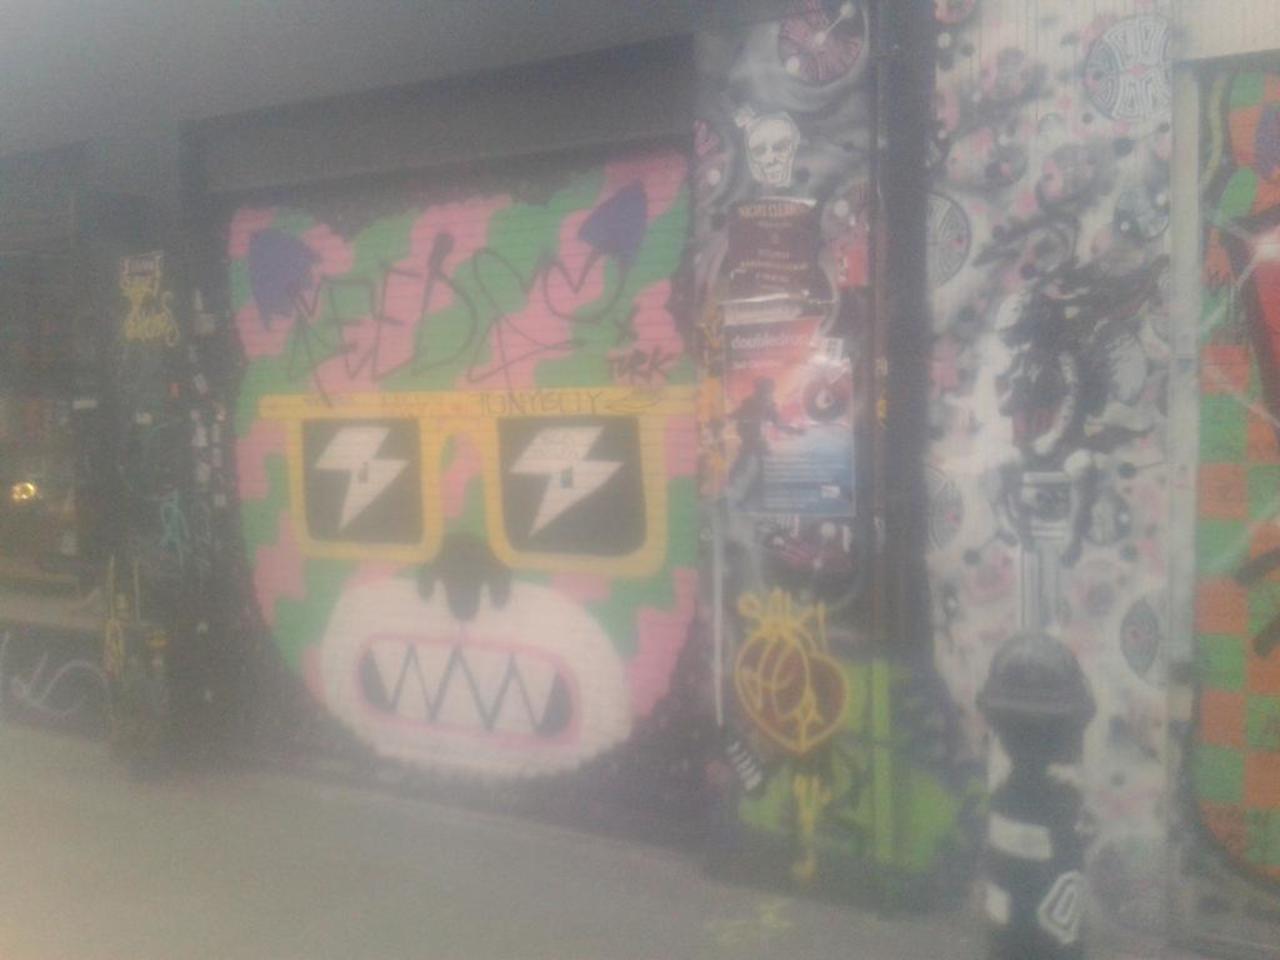 Loving #shoreditch #graffiti ! 29GB Free to backup & save your best #streetart #photo on http://www.phatdock.com https://t.co/v6rOhn0eGE